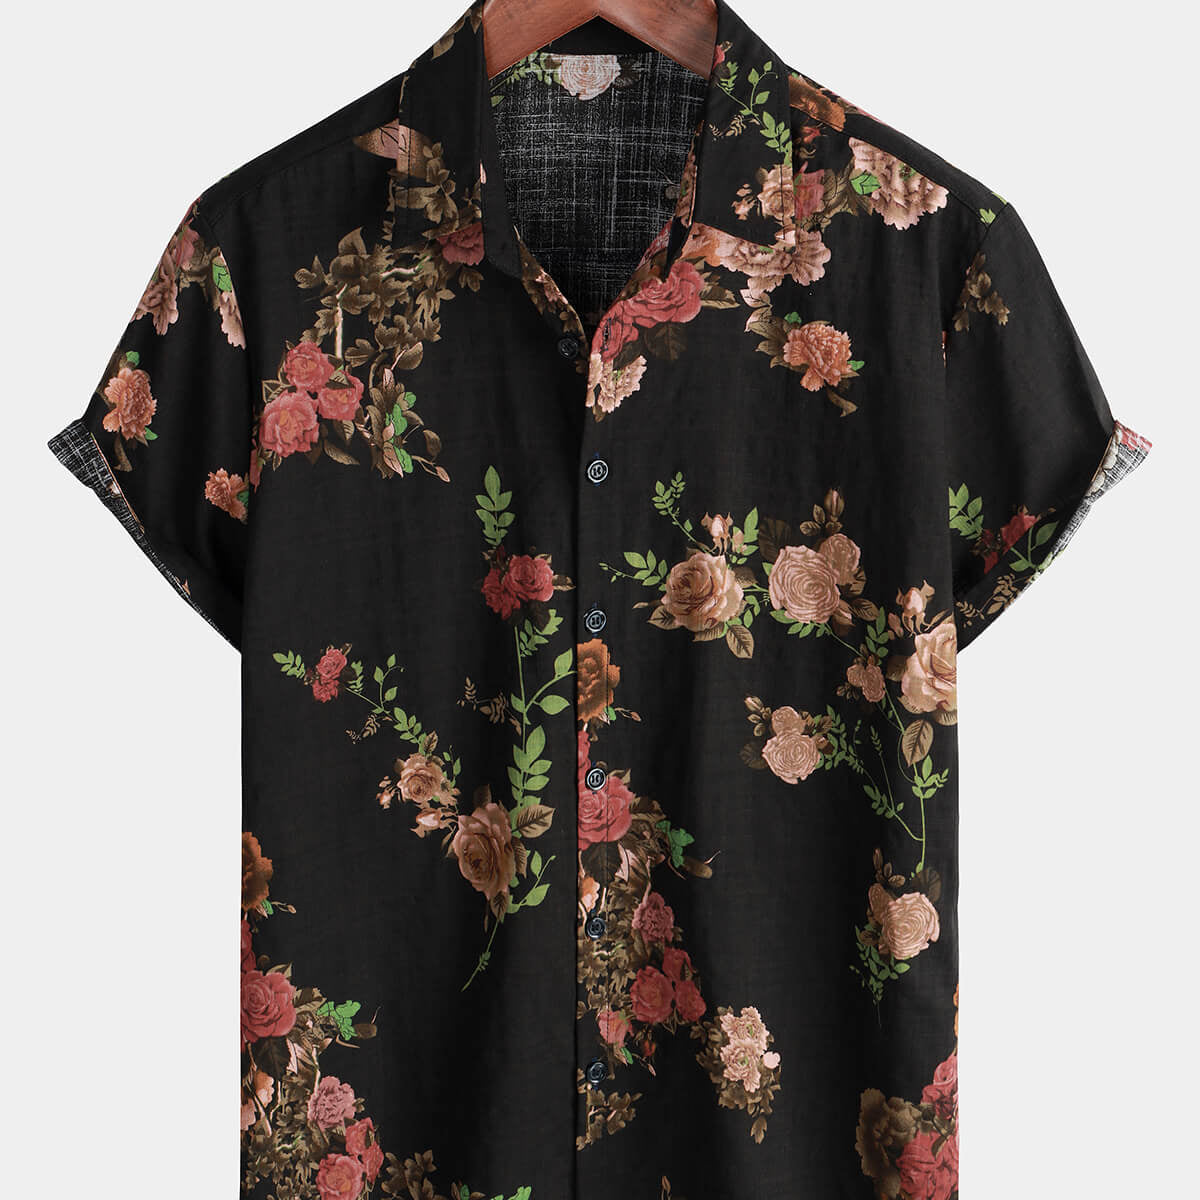 Men's Vintage Rose Cotton Floral Button Up Holiday Summer Beach Hawaiian Shirt